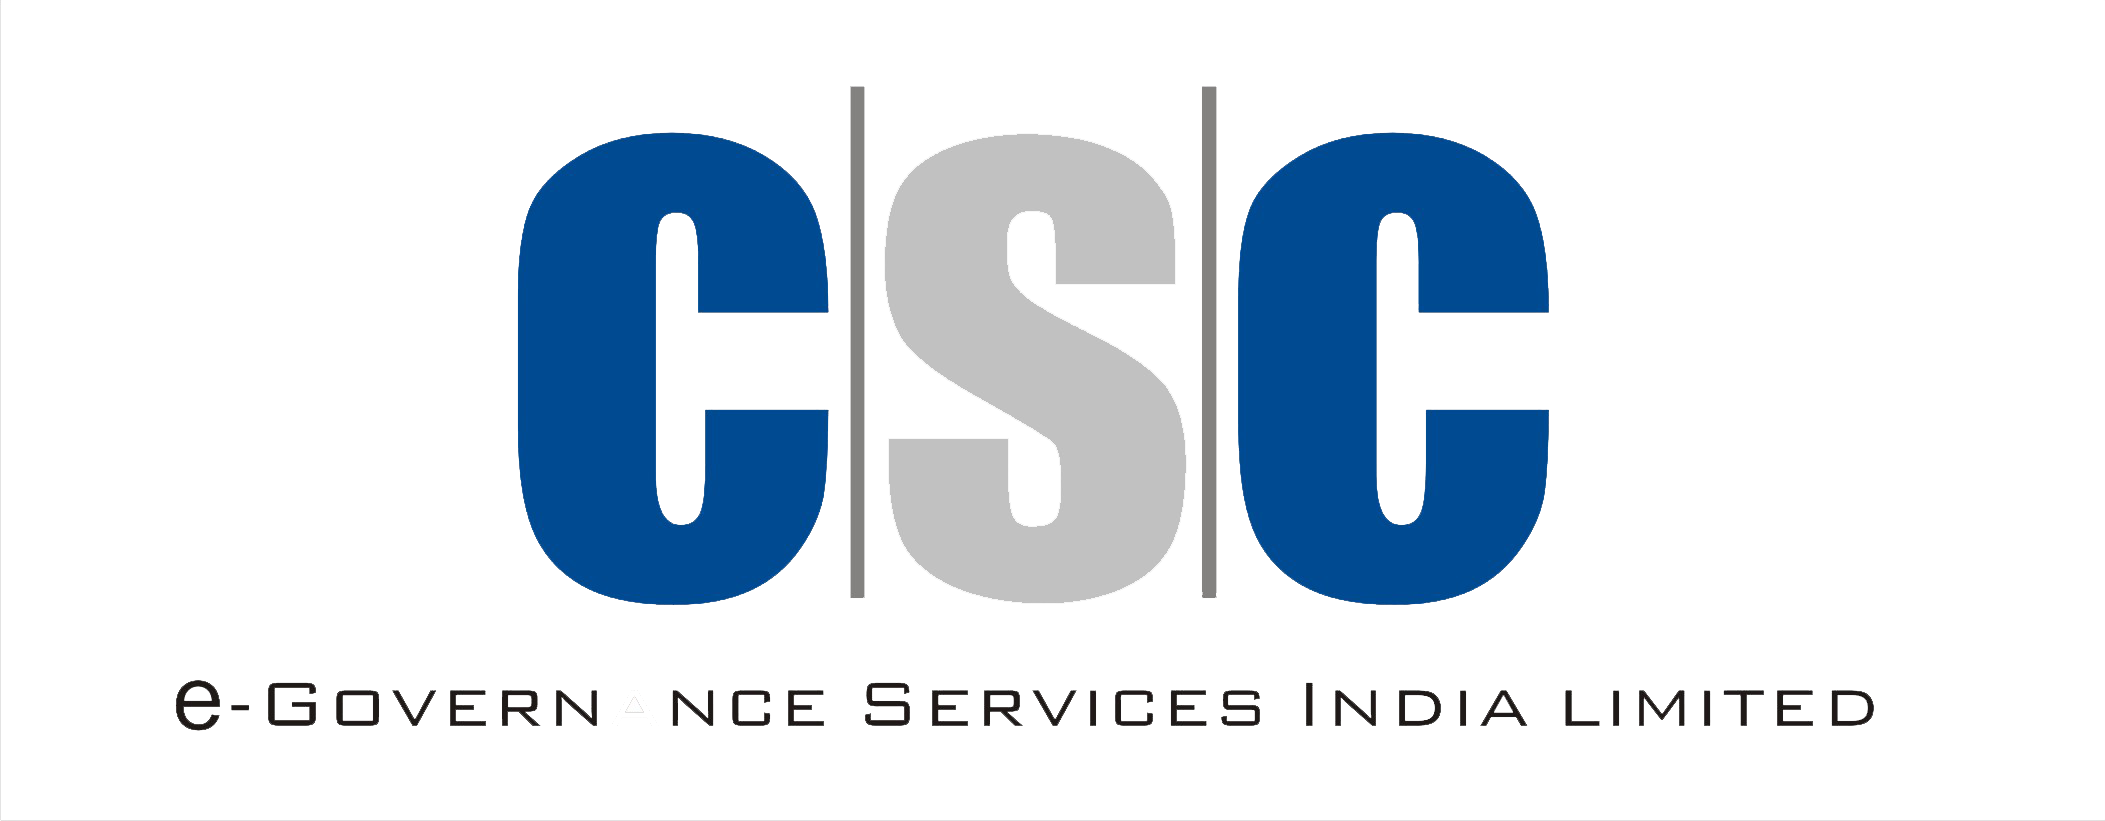 22 - Csc E Governance Services India Ltd (2105x821)